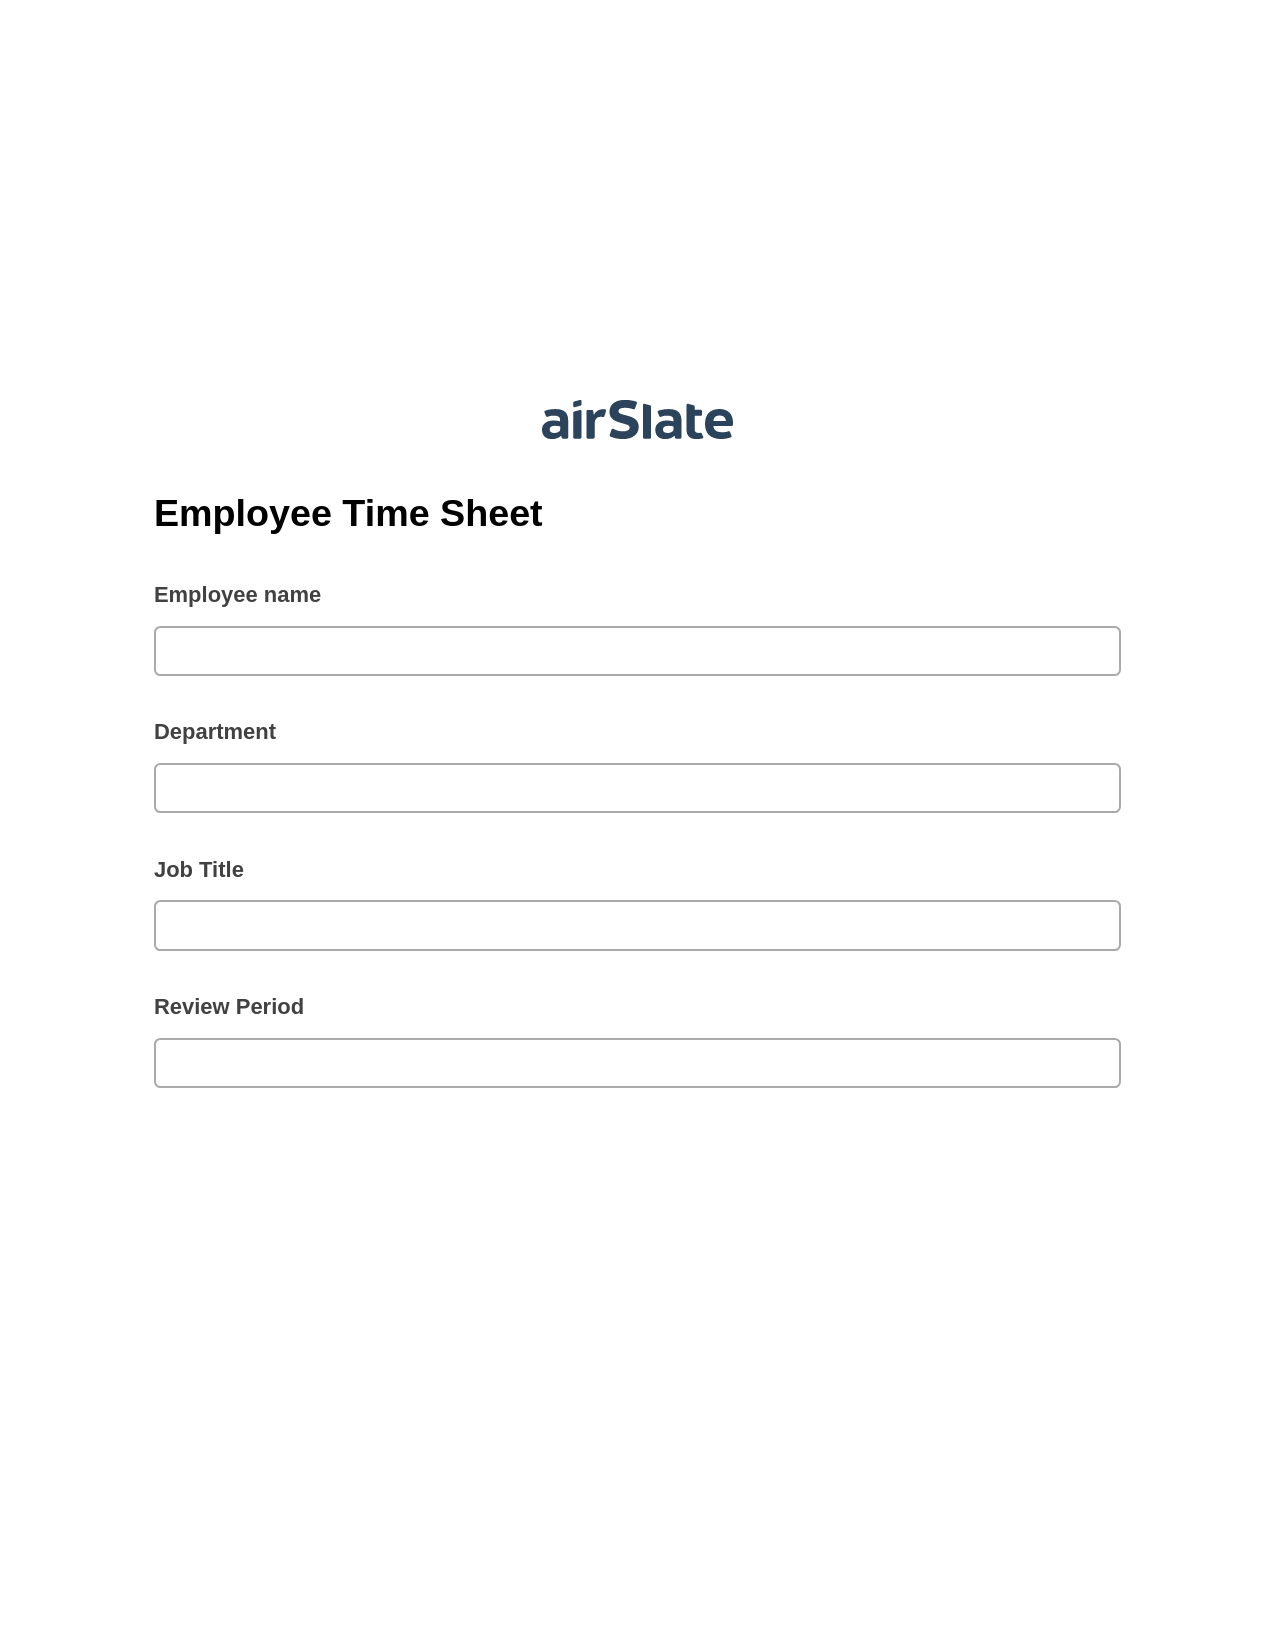 Multirole Employee Time Sheet System Bot - Slack Two-Way Binding Bot, Create slate addon, Archive to Google Drive Bot